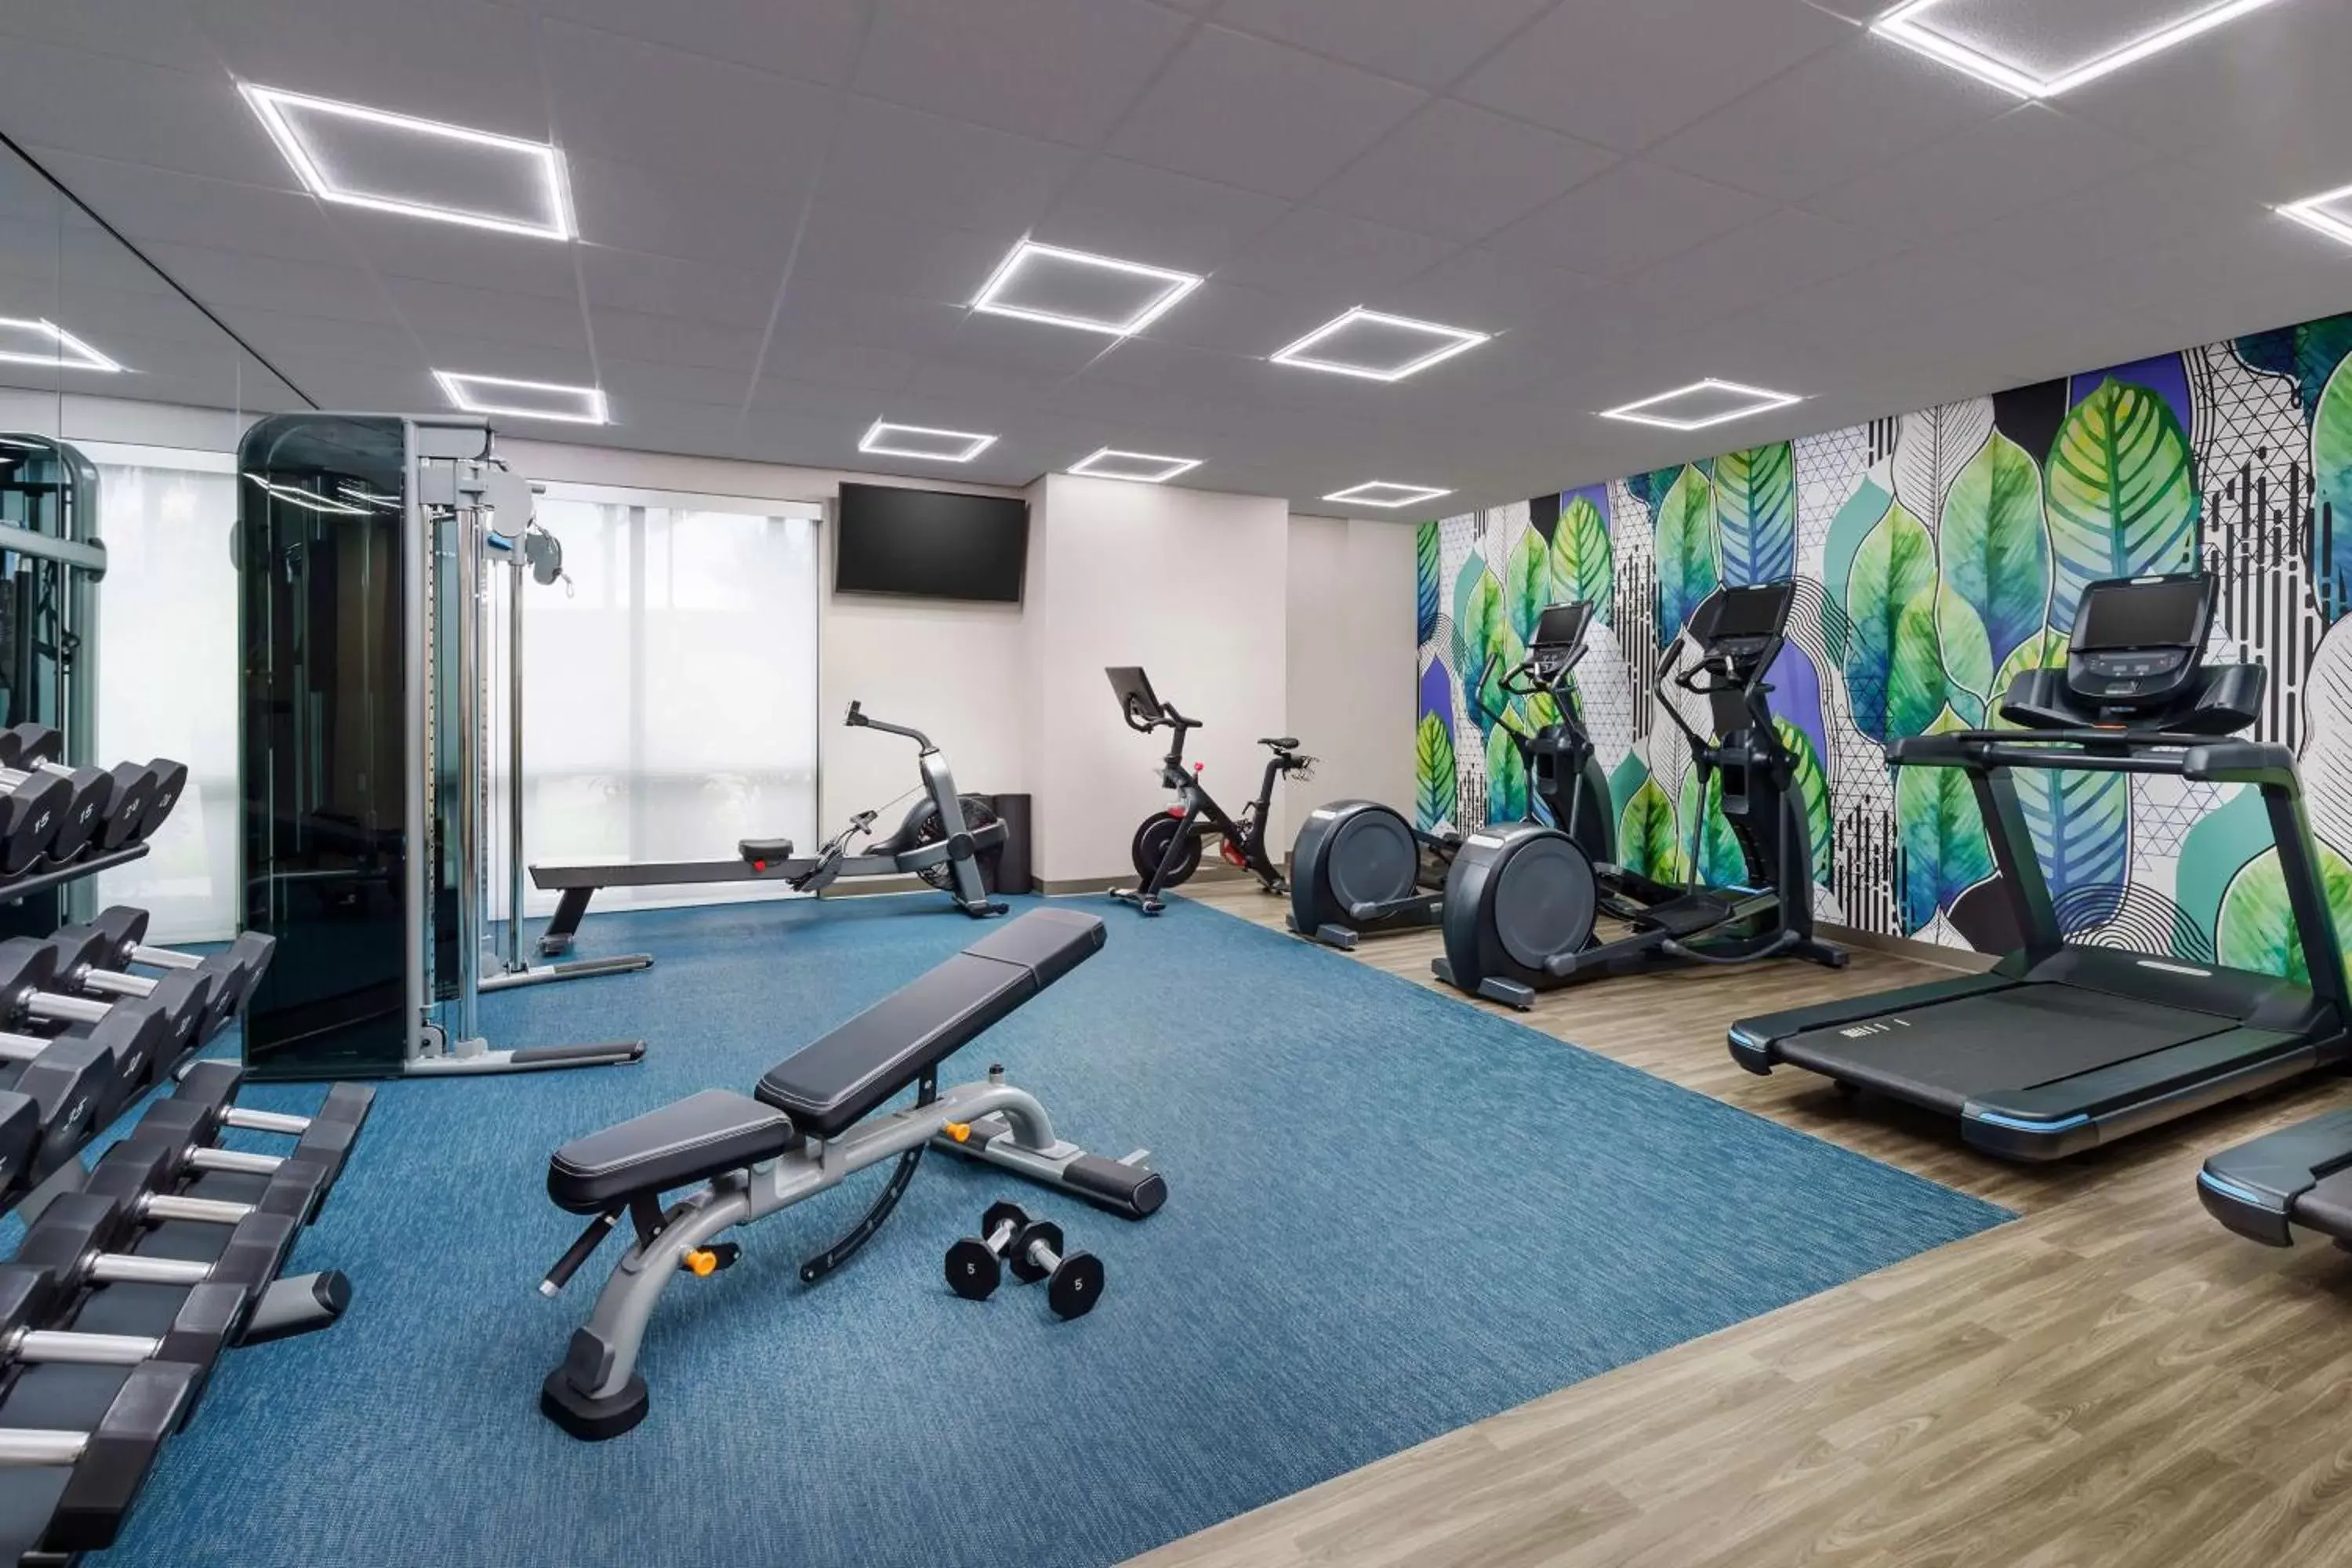 Fitness centre/facilities, Fitness Center/Facilities in Hyatt Place across from Universal Orlando Resort